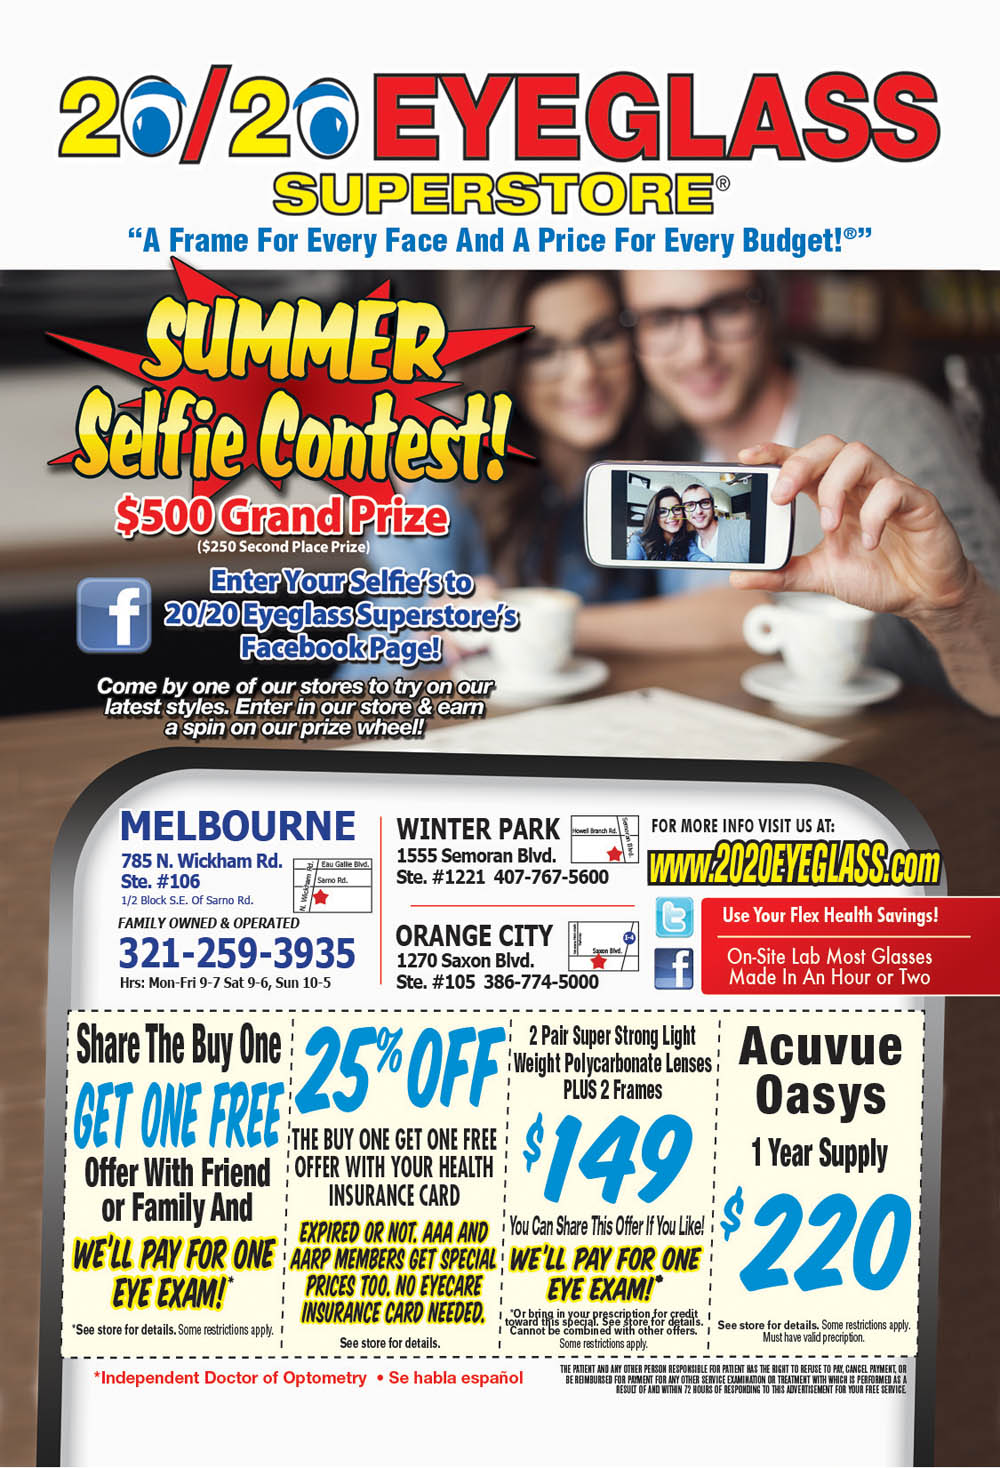 Summer selfie Contest